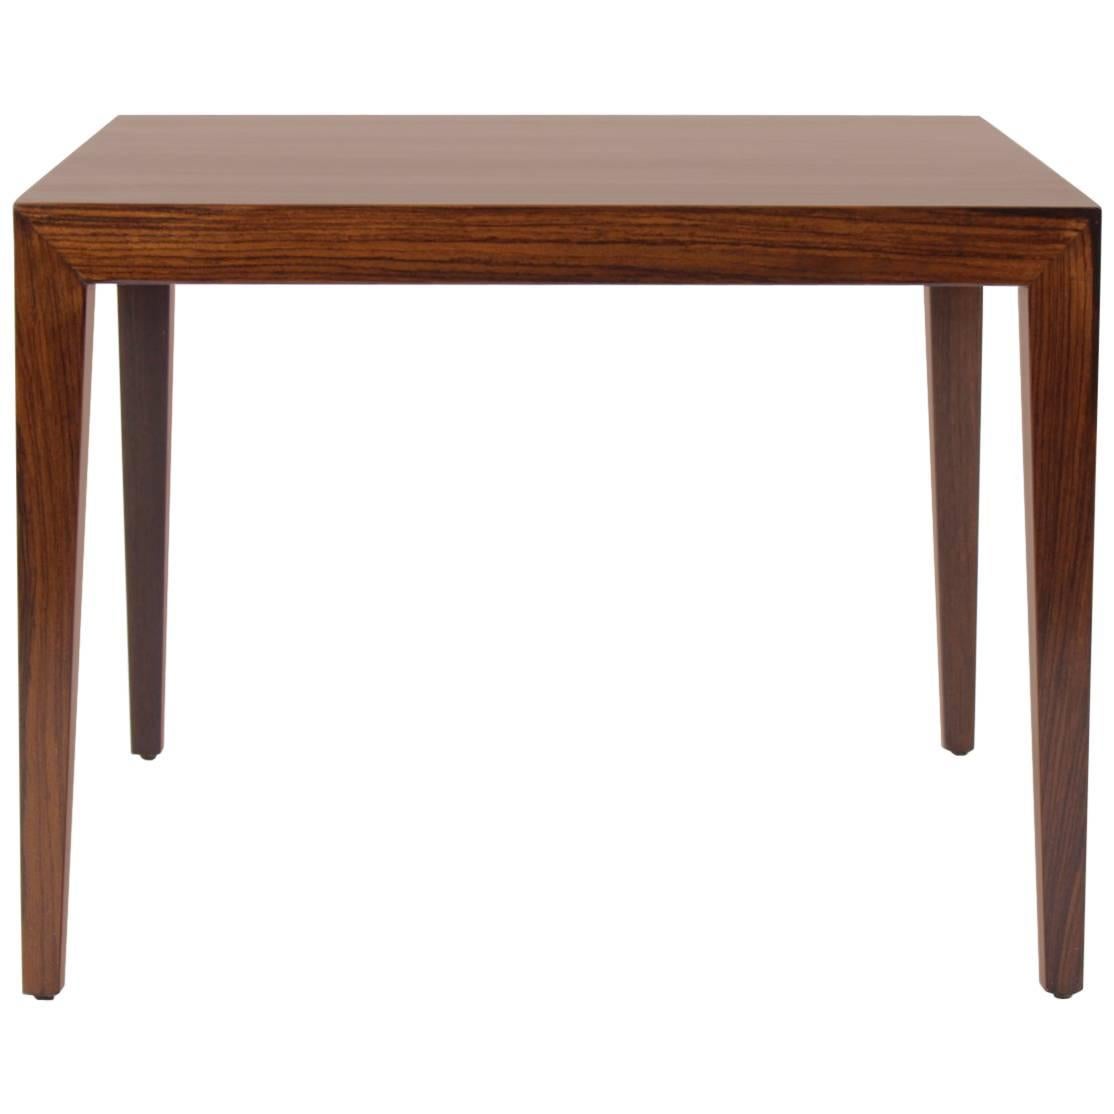 Side Table Designed by Severin Hansen for Haslev